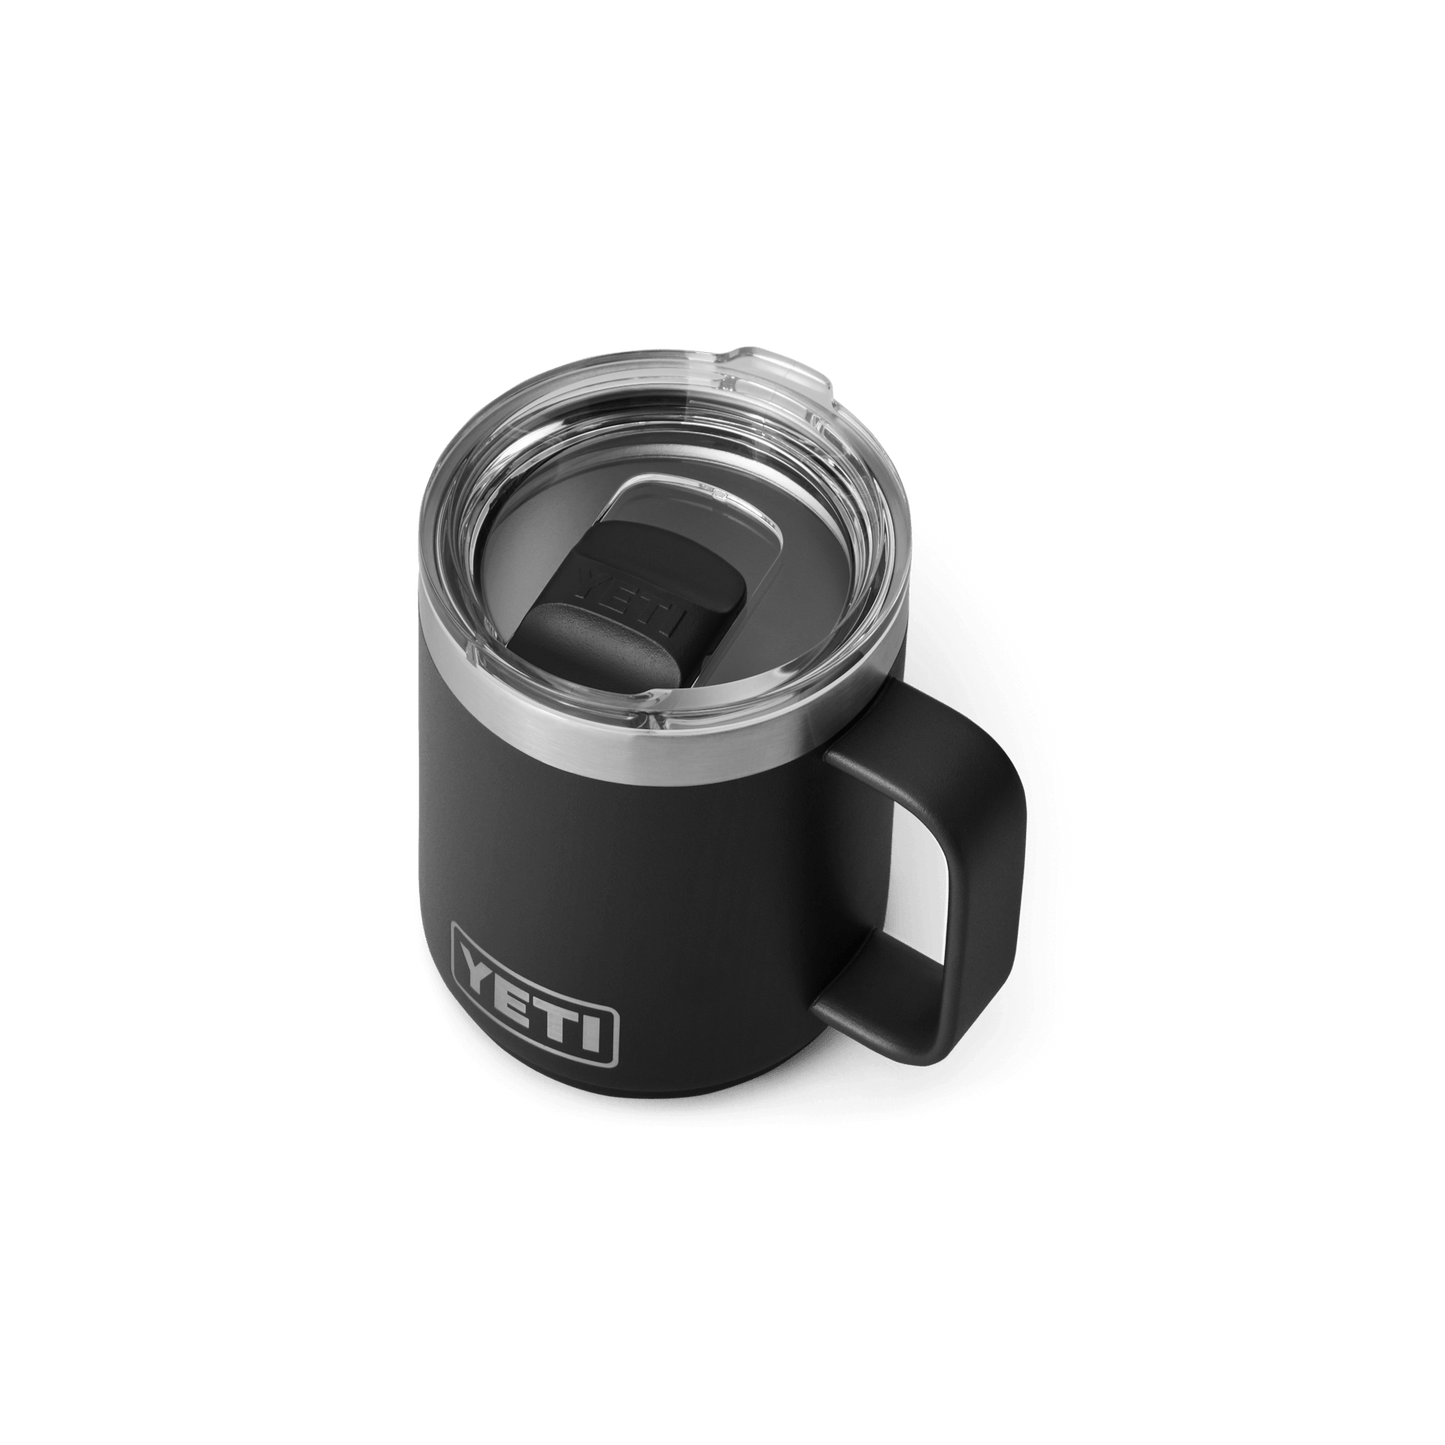 YETI Rambler® 10 oz (296 ml) Stackable Mug Black